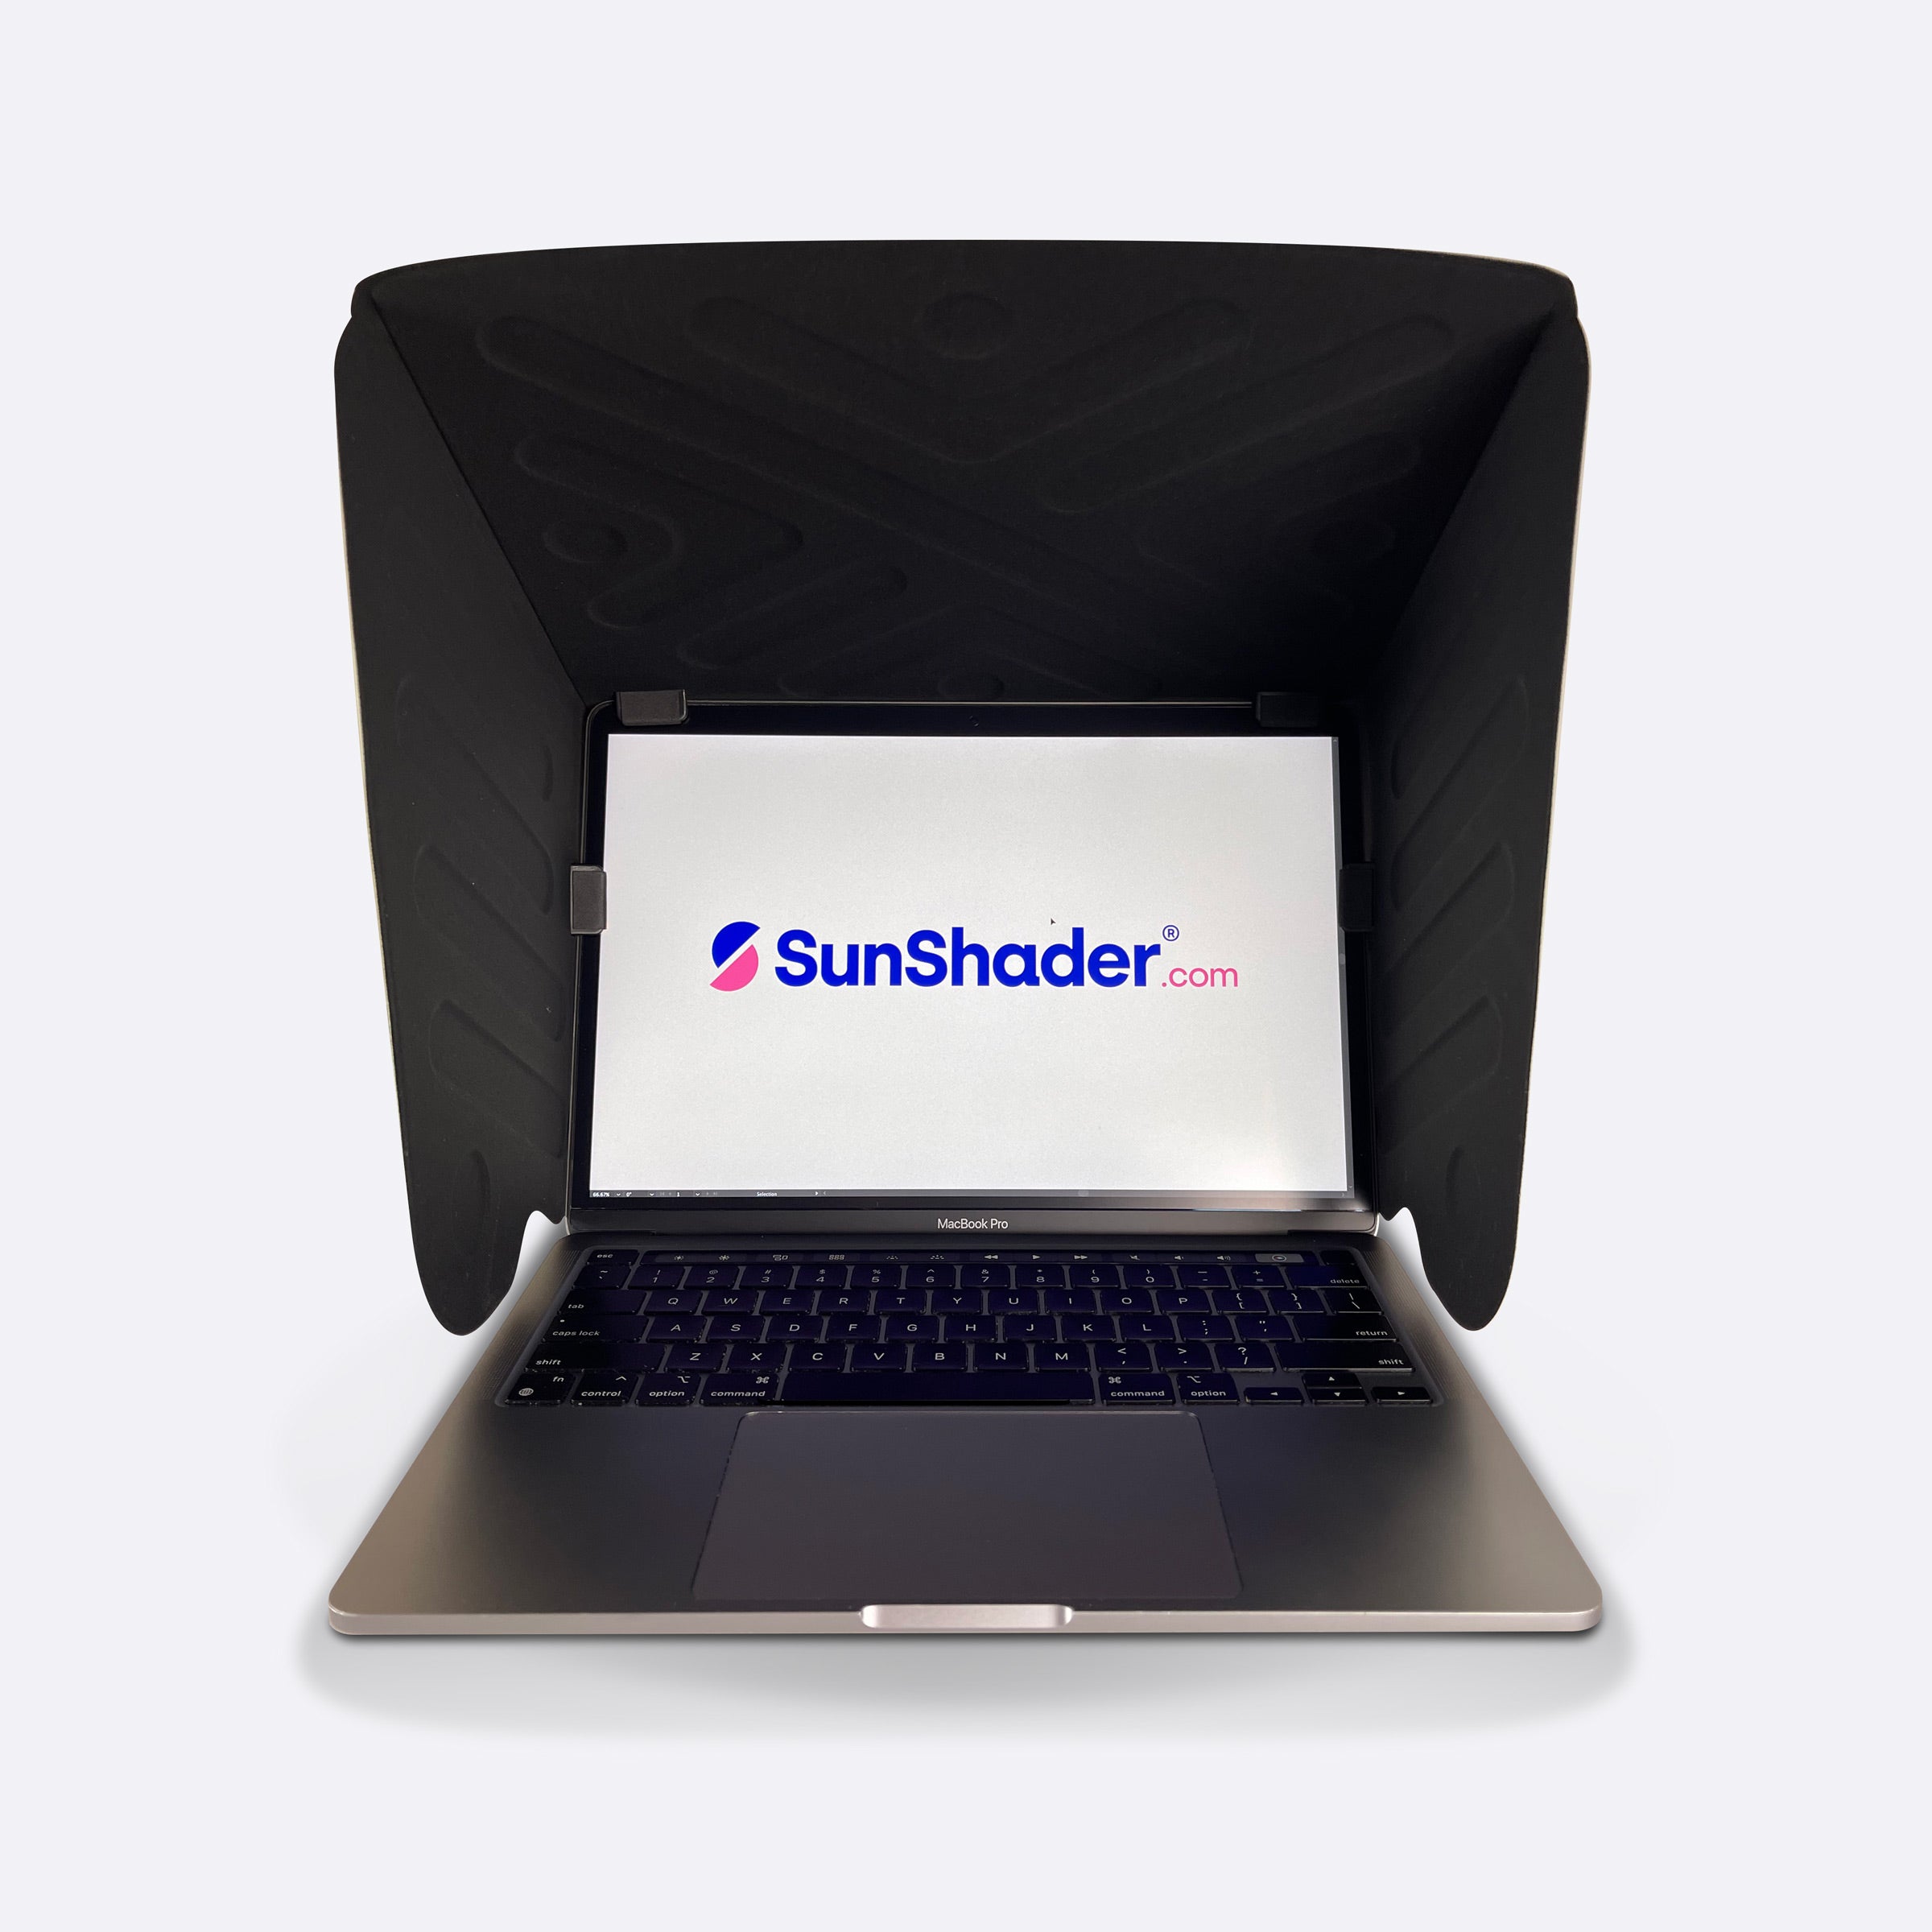 SunShader v3.5 (Opened Box)